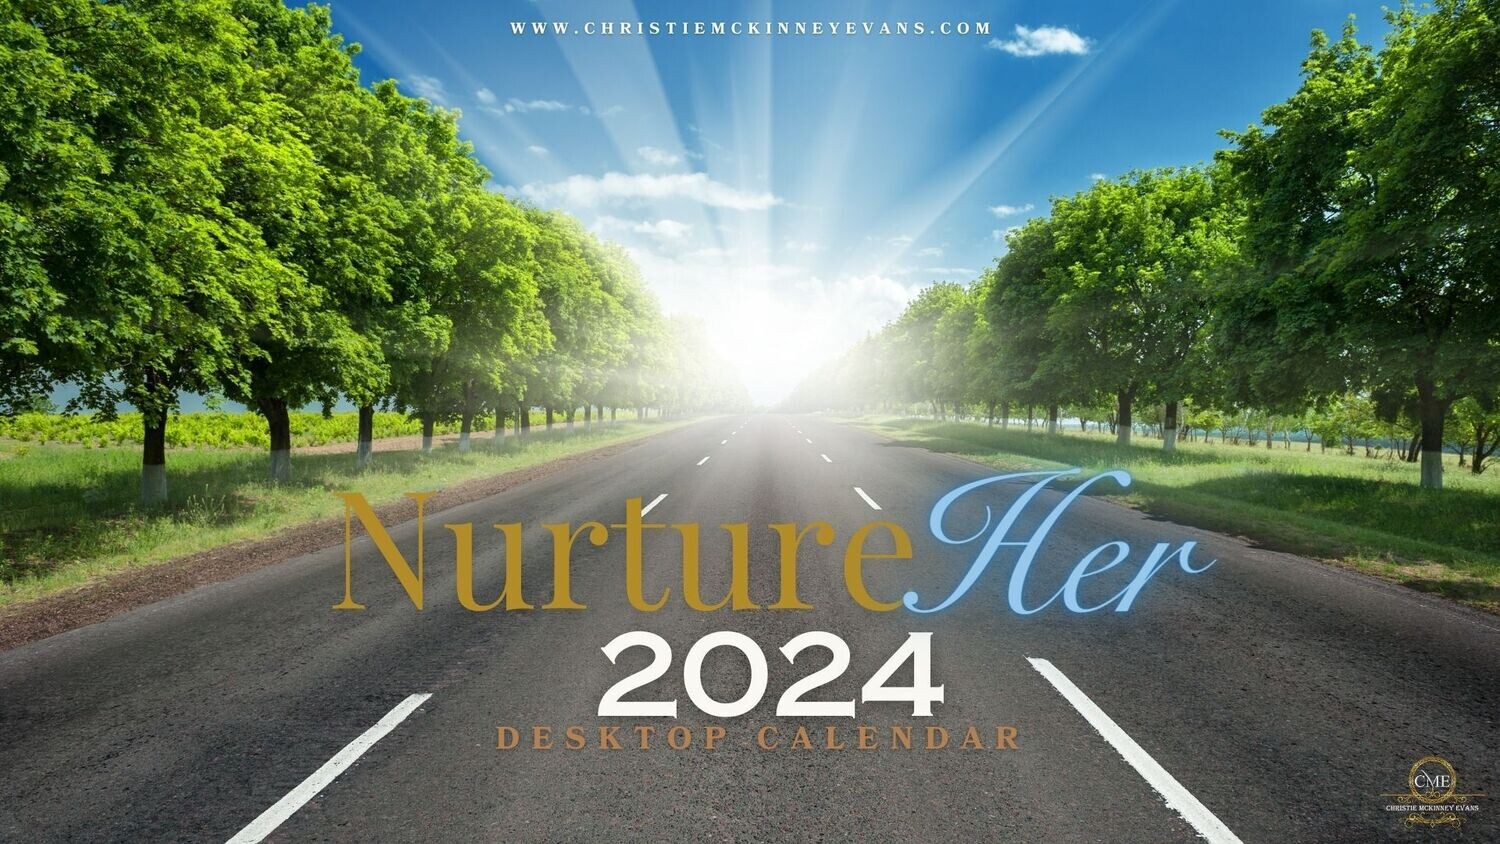 NurtureHER2024 Desktop Calendar